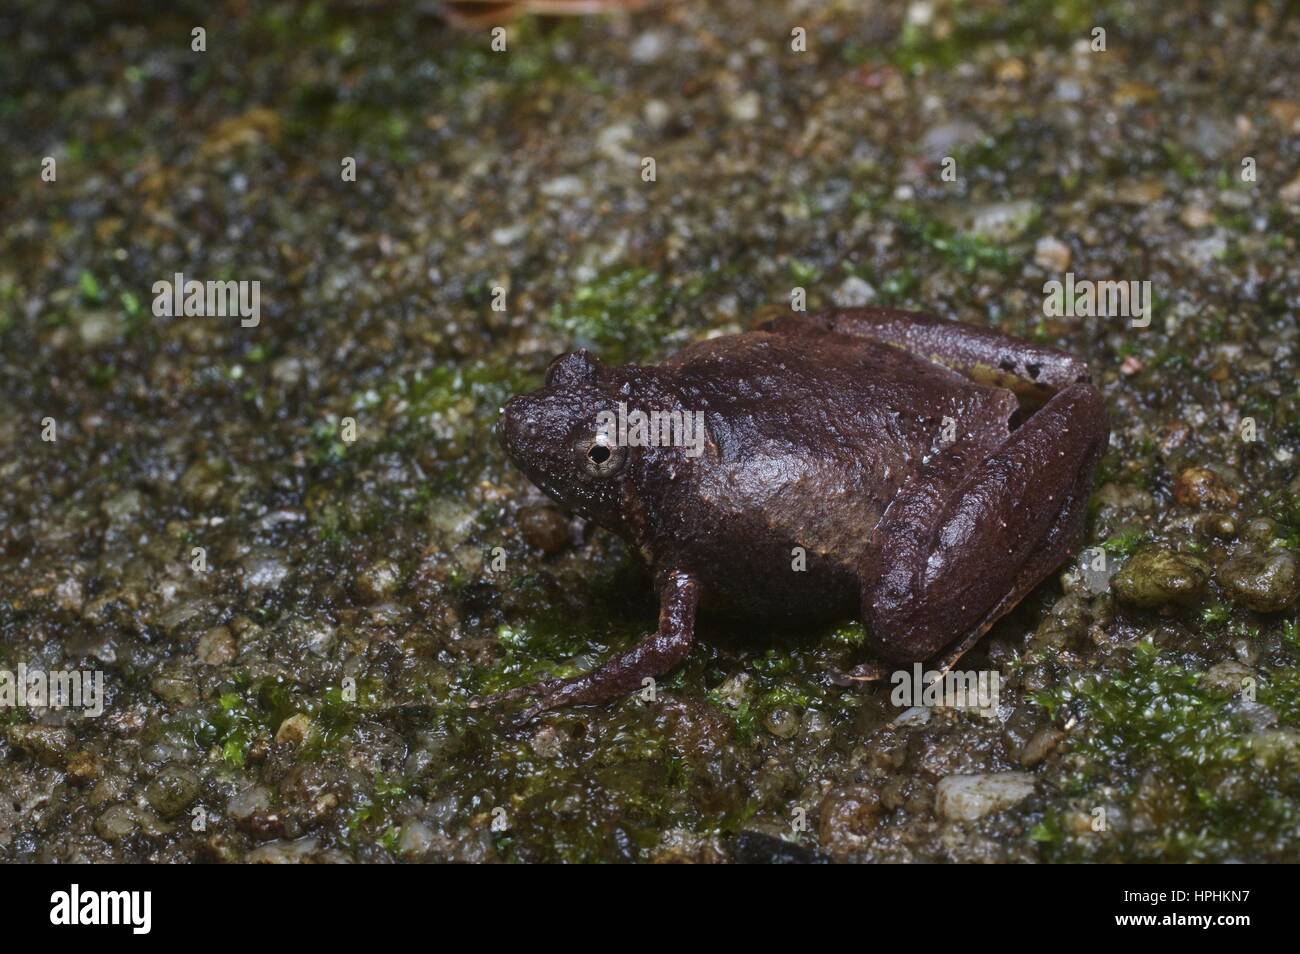 A Large Pygmy Frog (Microhyla berdmorei) in the rainforest at Ulu Semenyih, Selangor, Malaysia Stock Photo